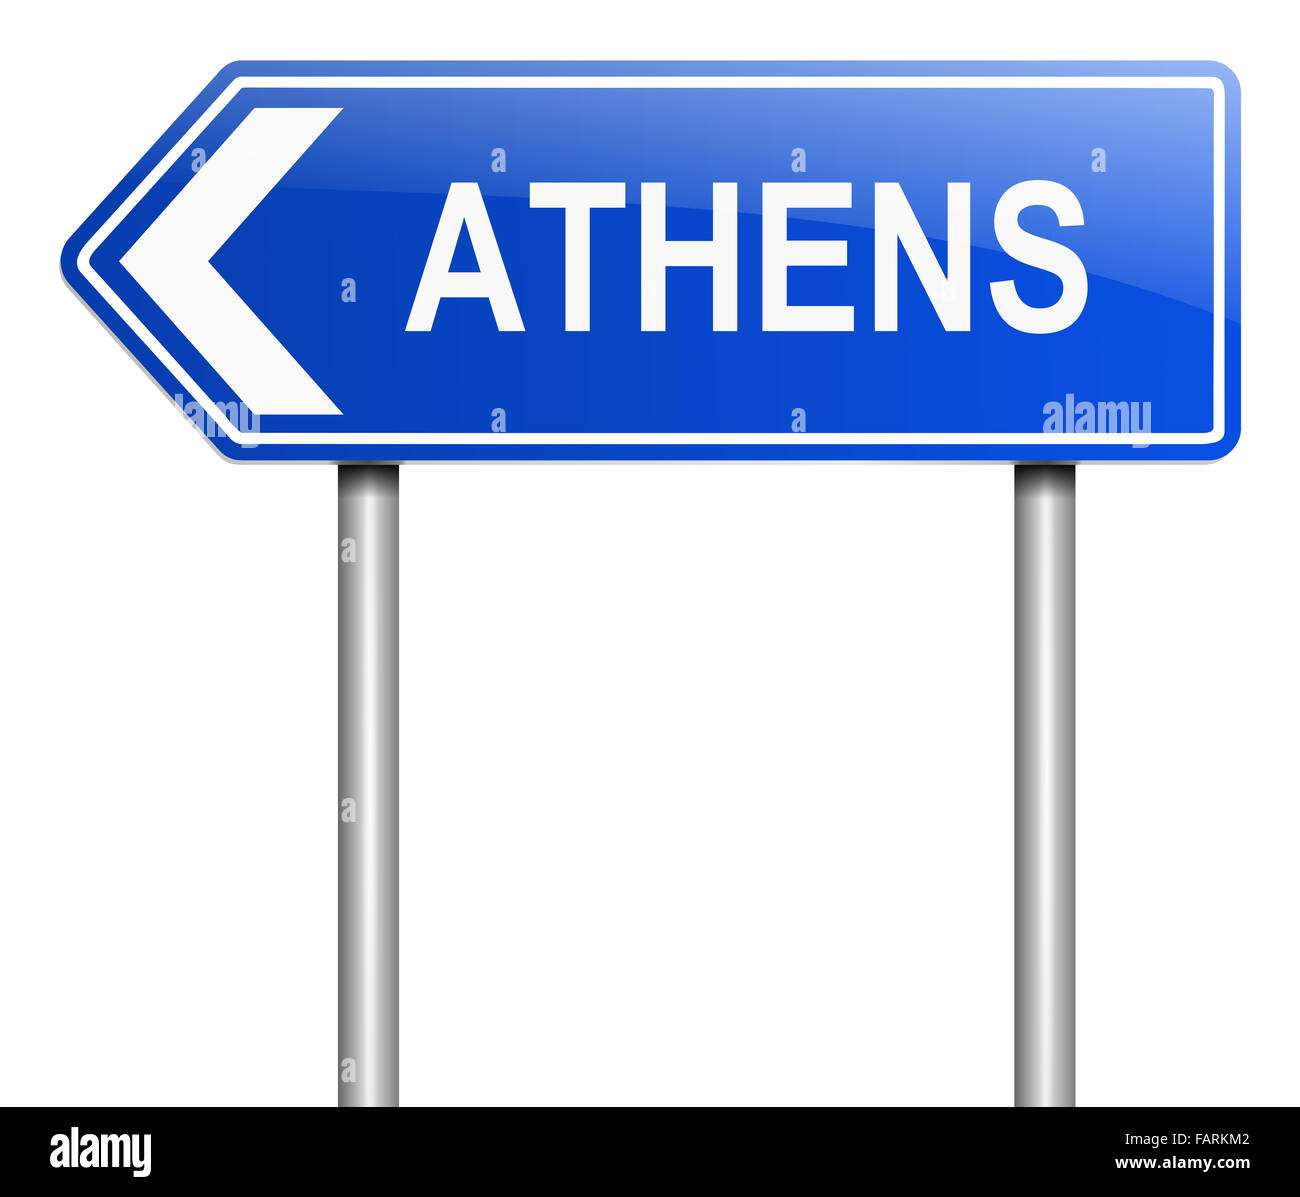 Athens concept. Stock Photo